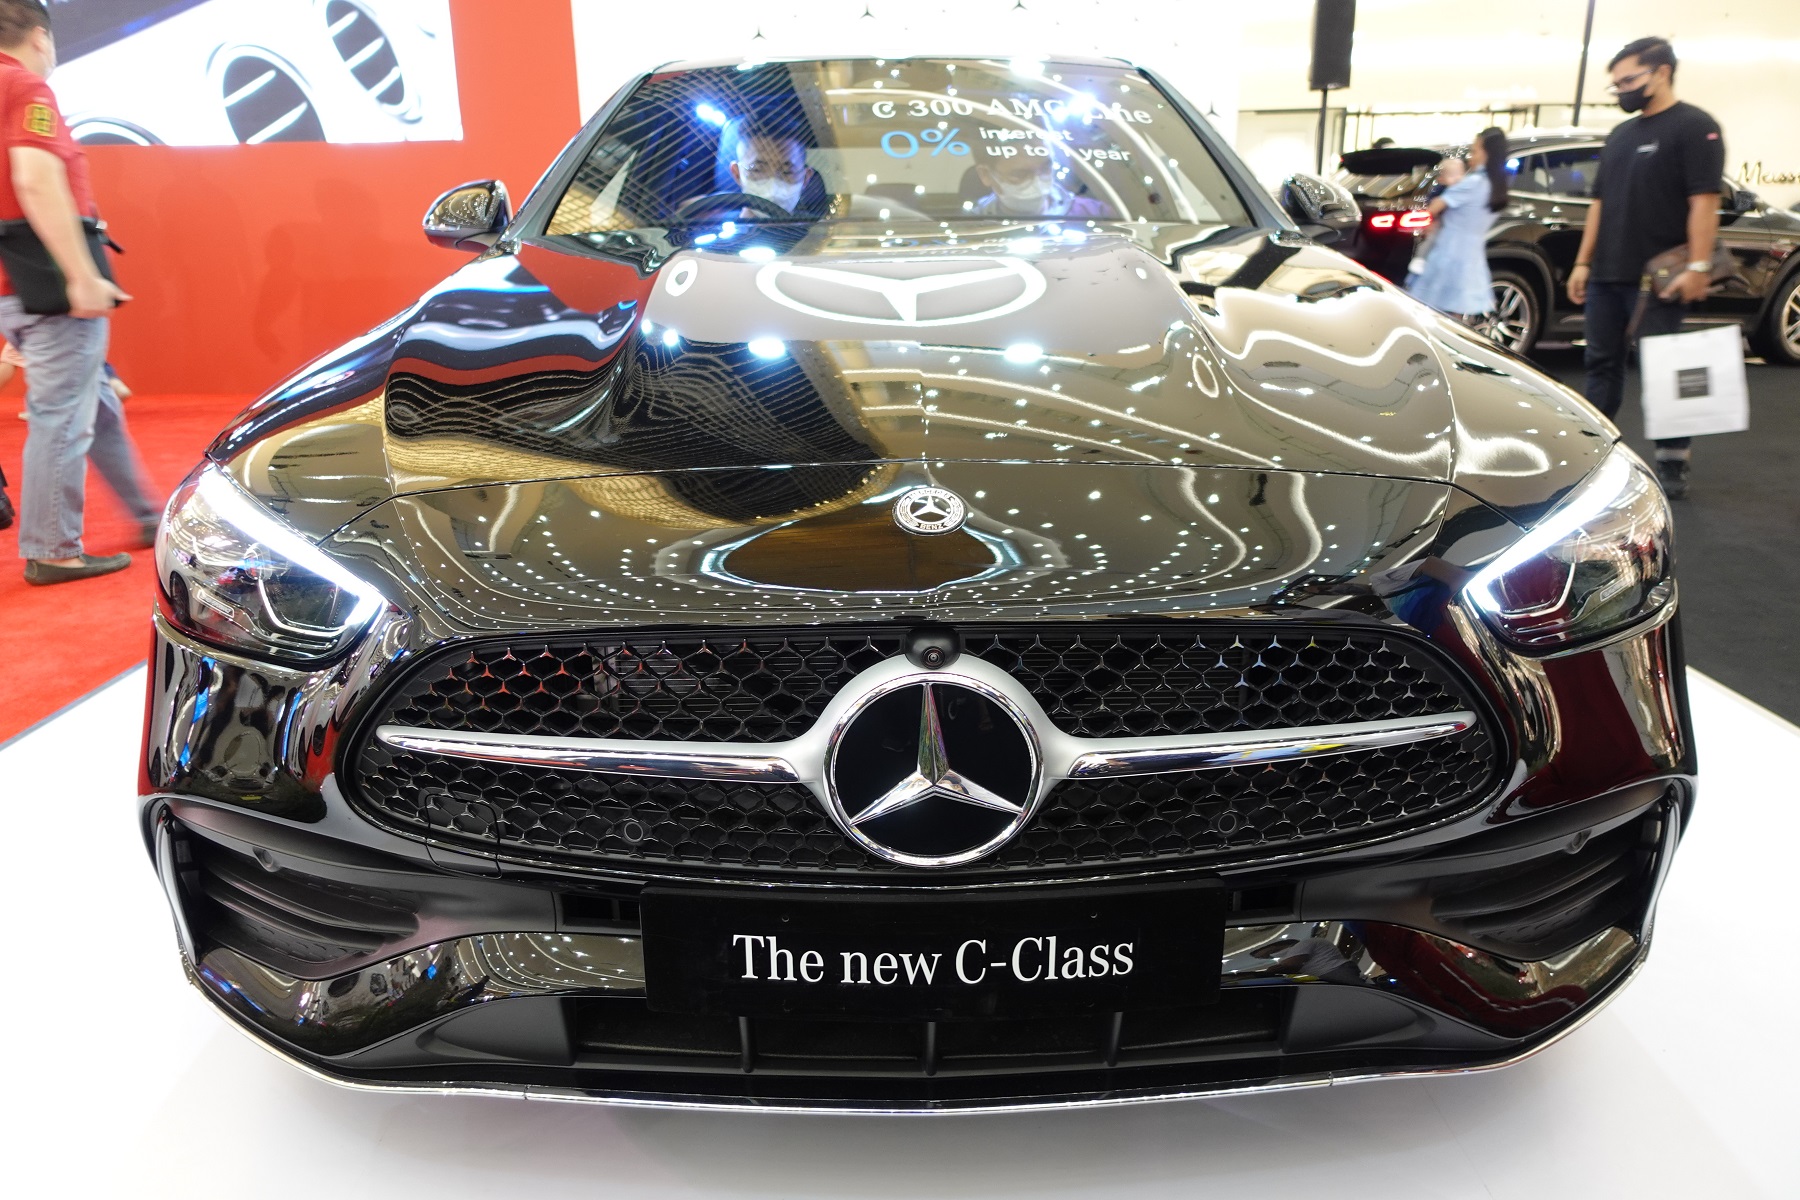 Mercedes-Benz Luncurkan All New C-Class, Harga Mulai Rp970 Juta